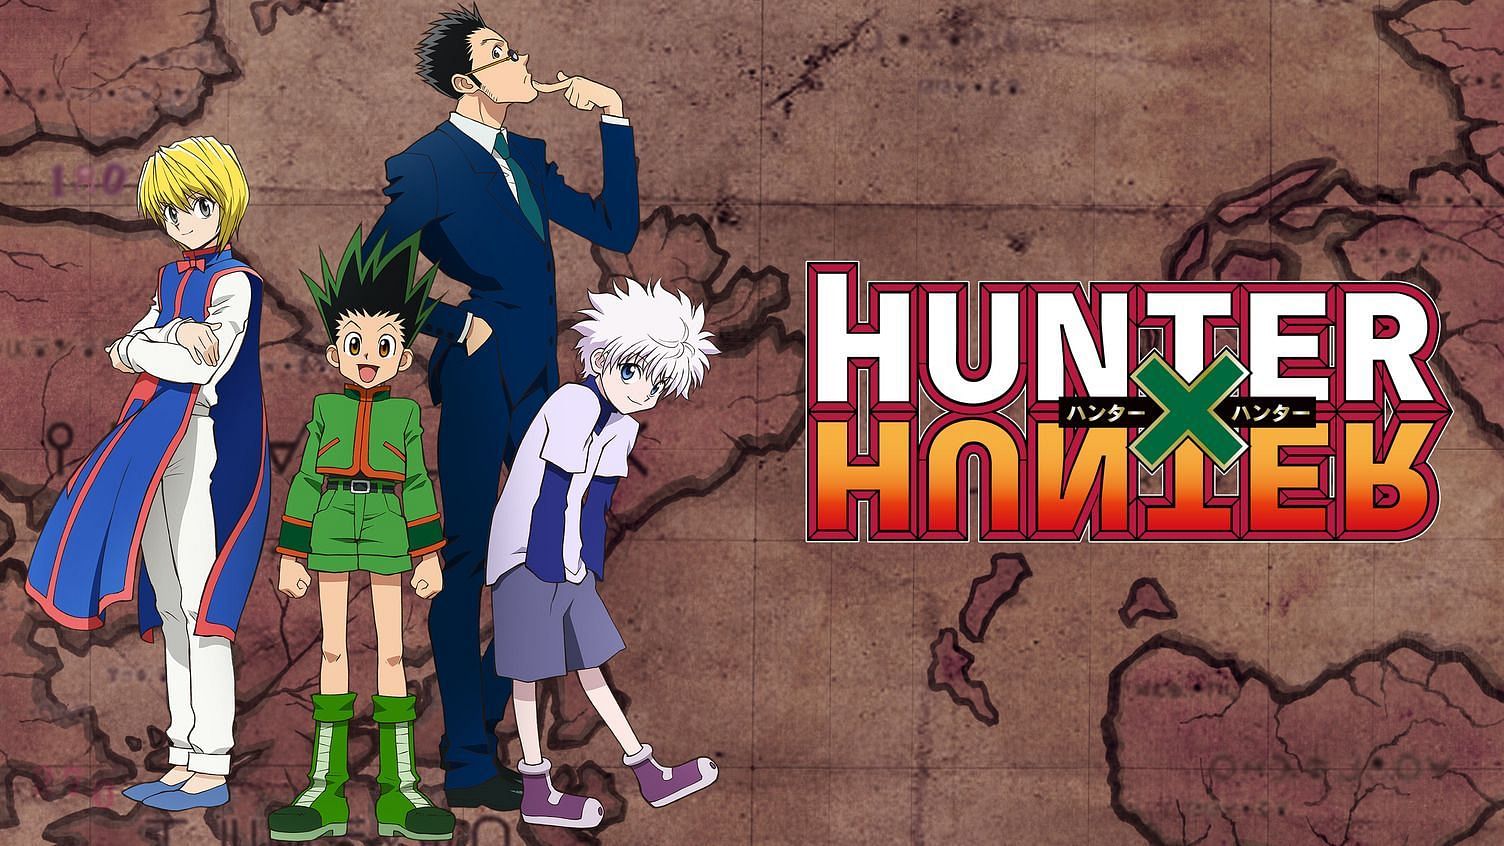 Hunter x Hunter manga creator teases new chapters, gains 1 million